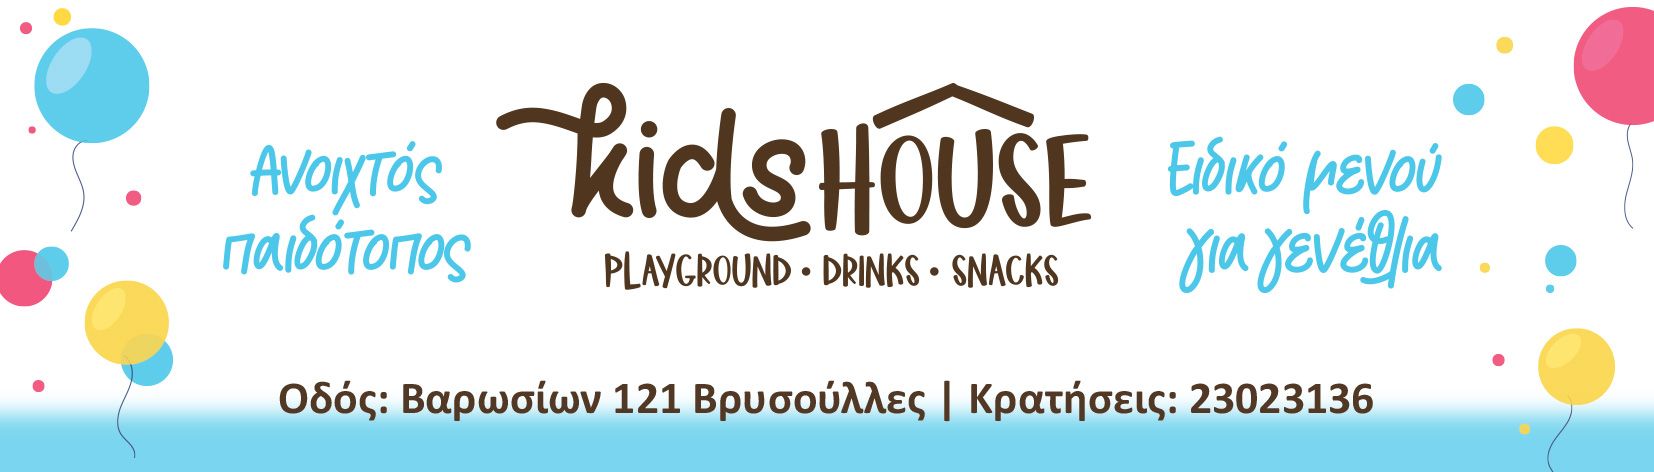 Kids House lwrida